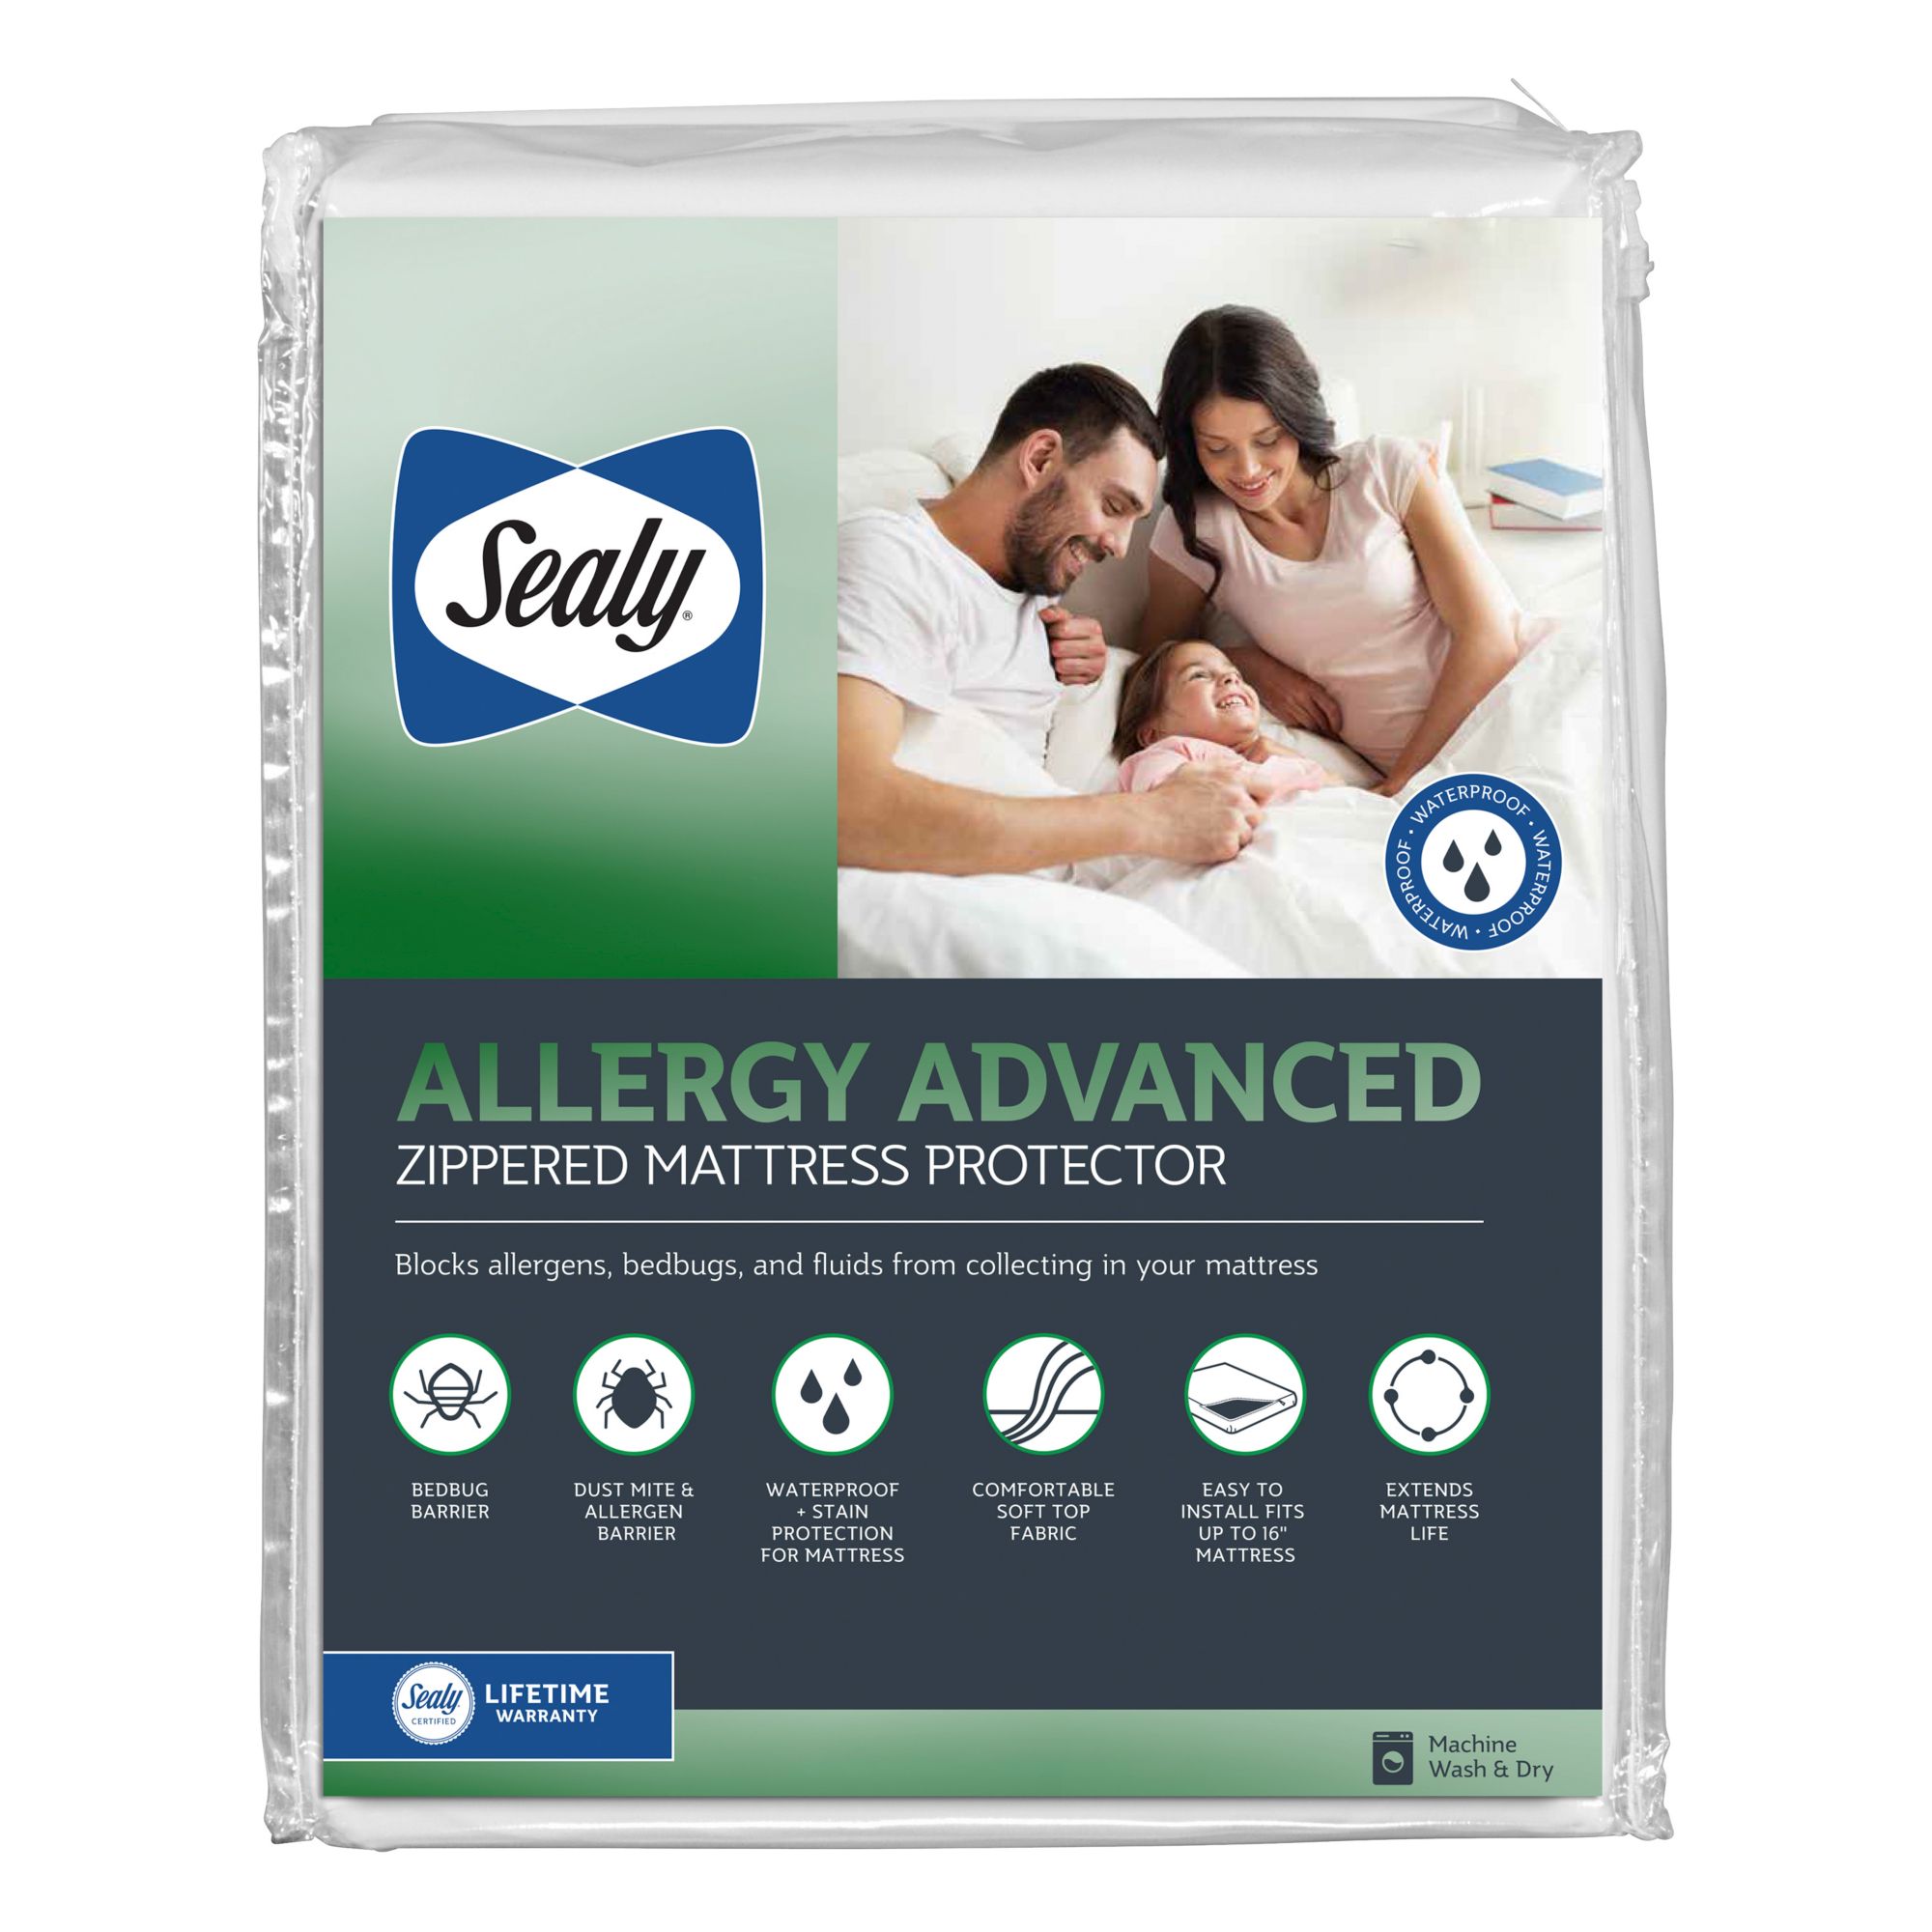 Sealy Waterproof Crib Mattress Pad, White - 2 pack